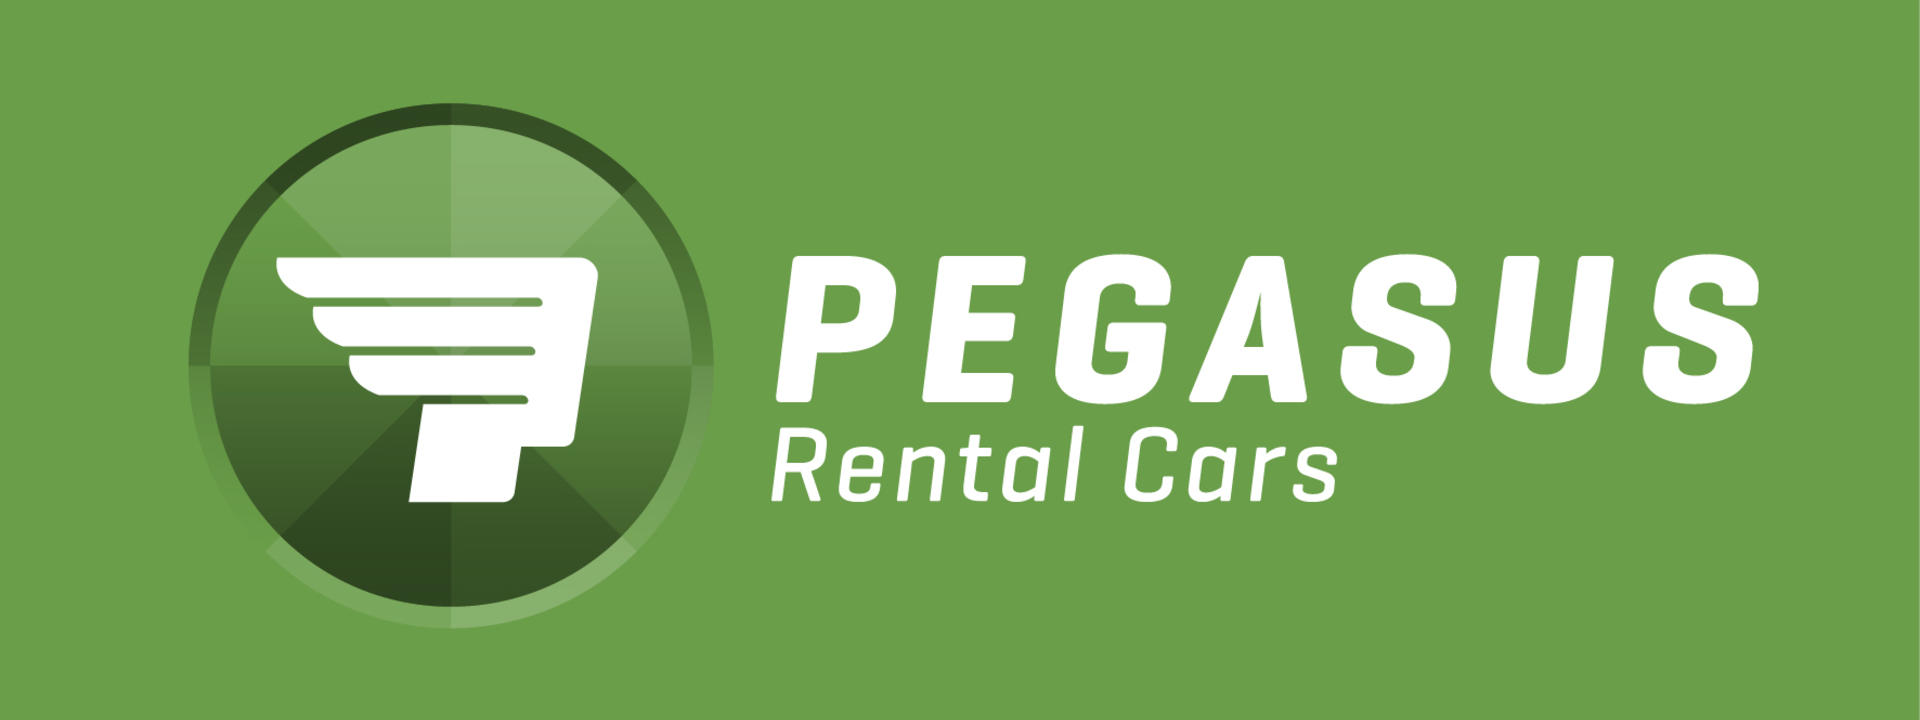 pegasus-horizontal-logo-rgb-reverse.jpg